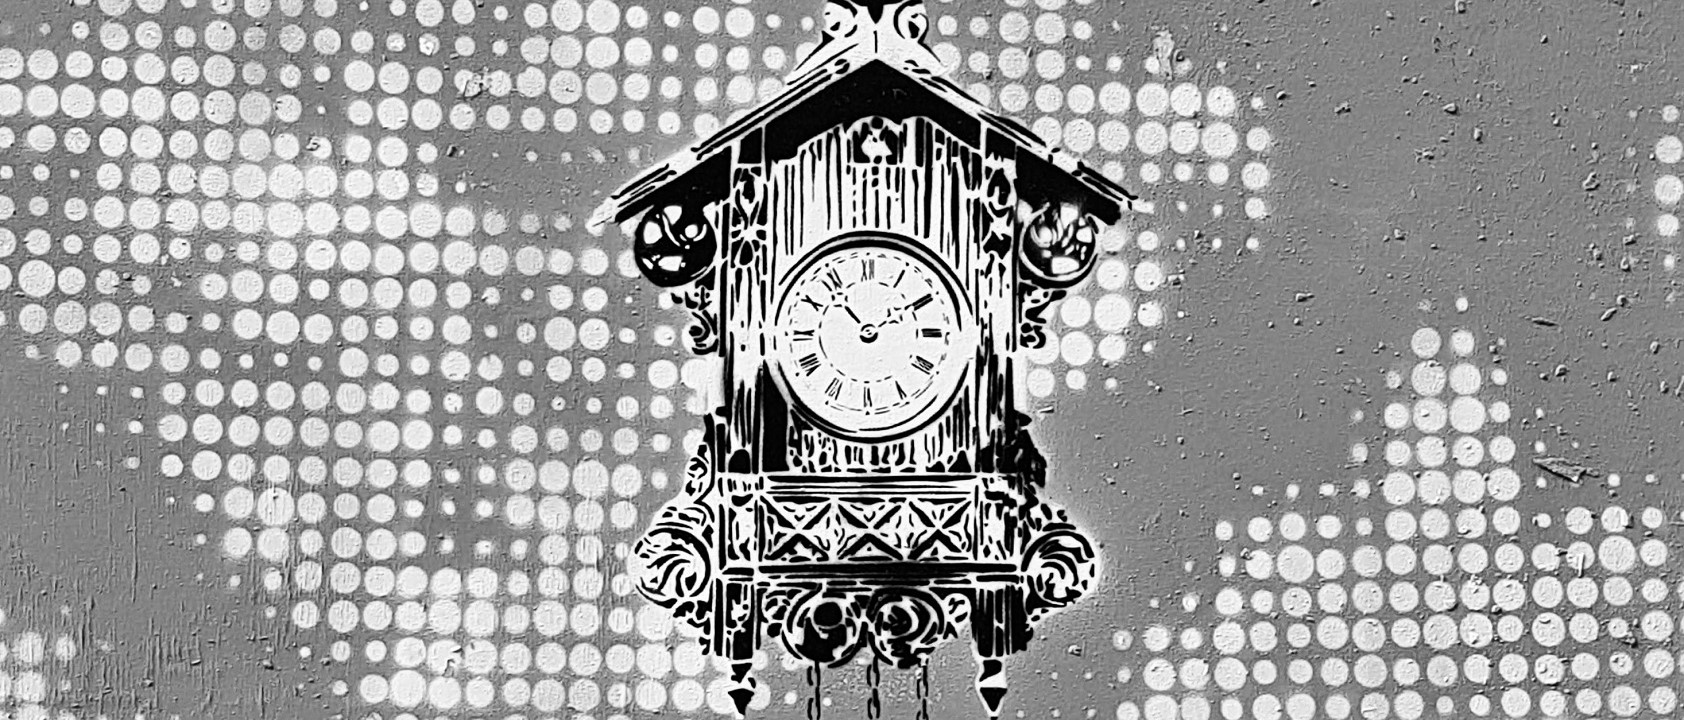 Switzerland Cuckoo Clock